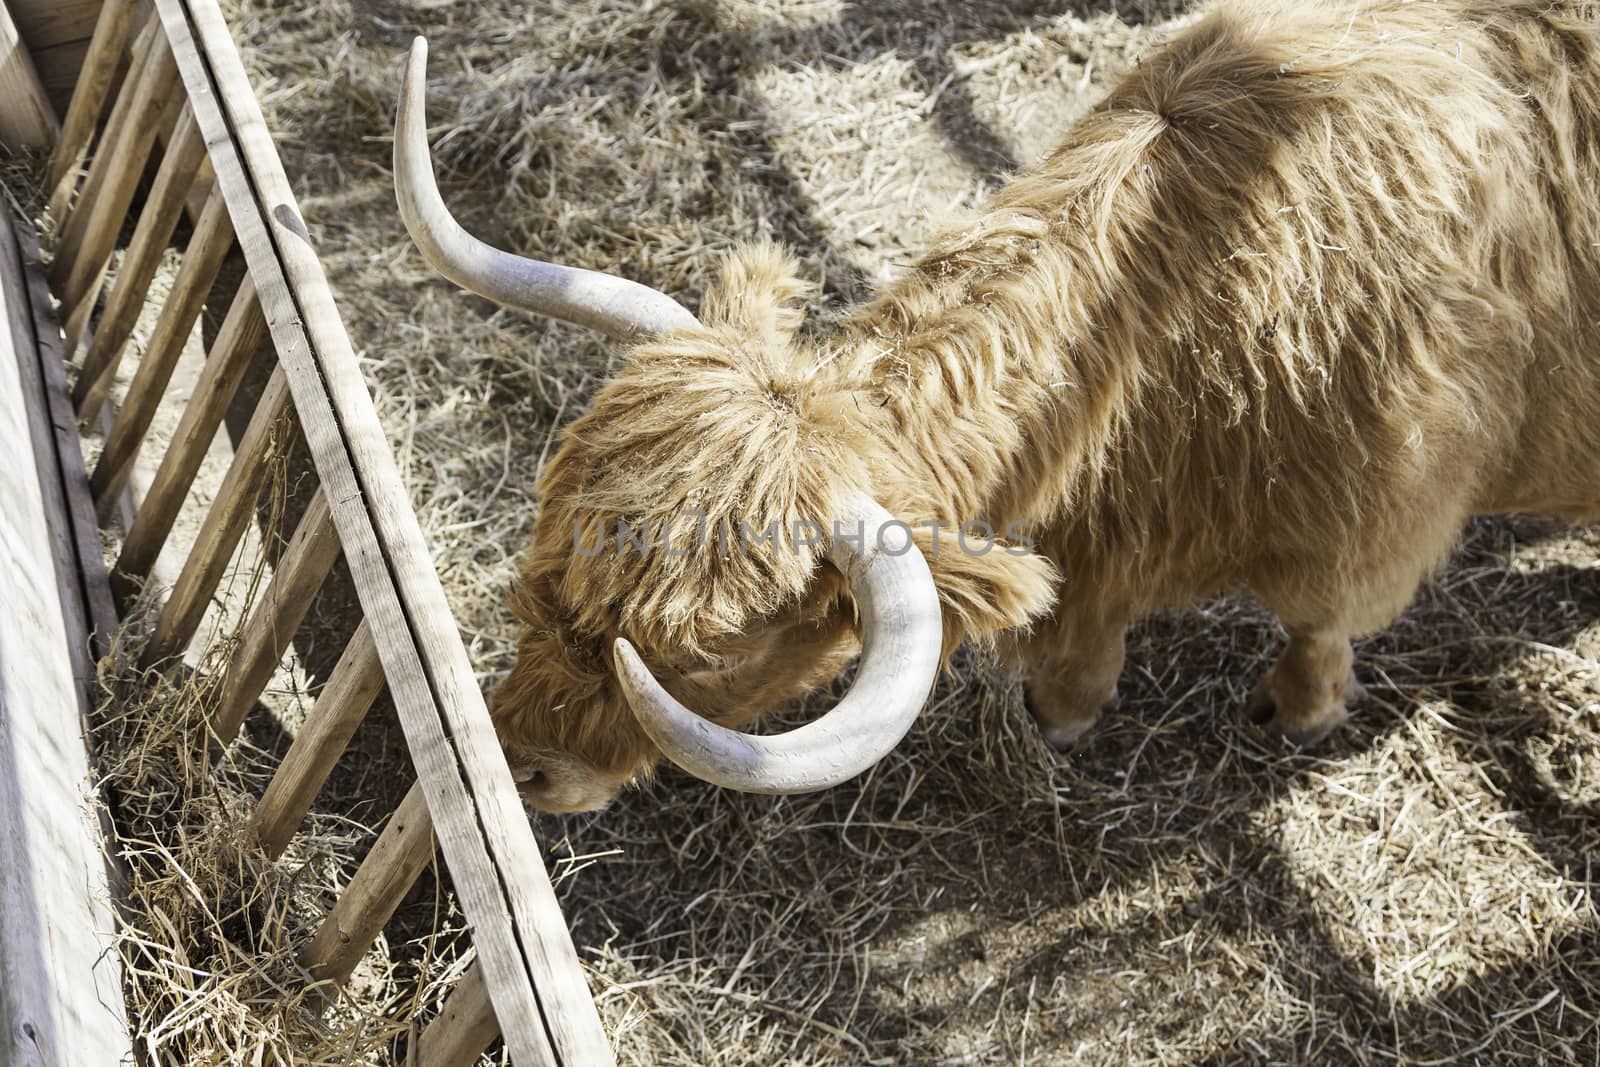 Irish Cow grazing, detail of a farm animal eating mammal on a farm